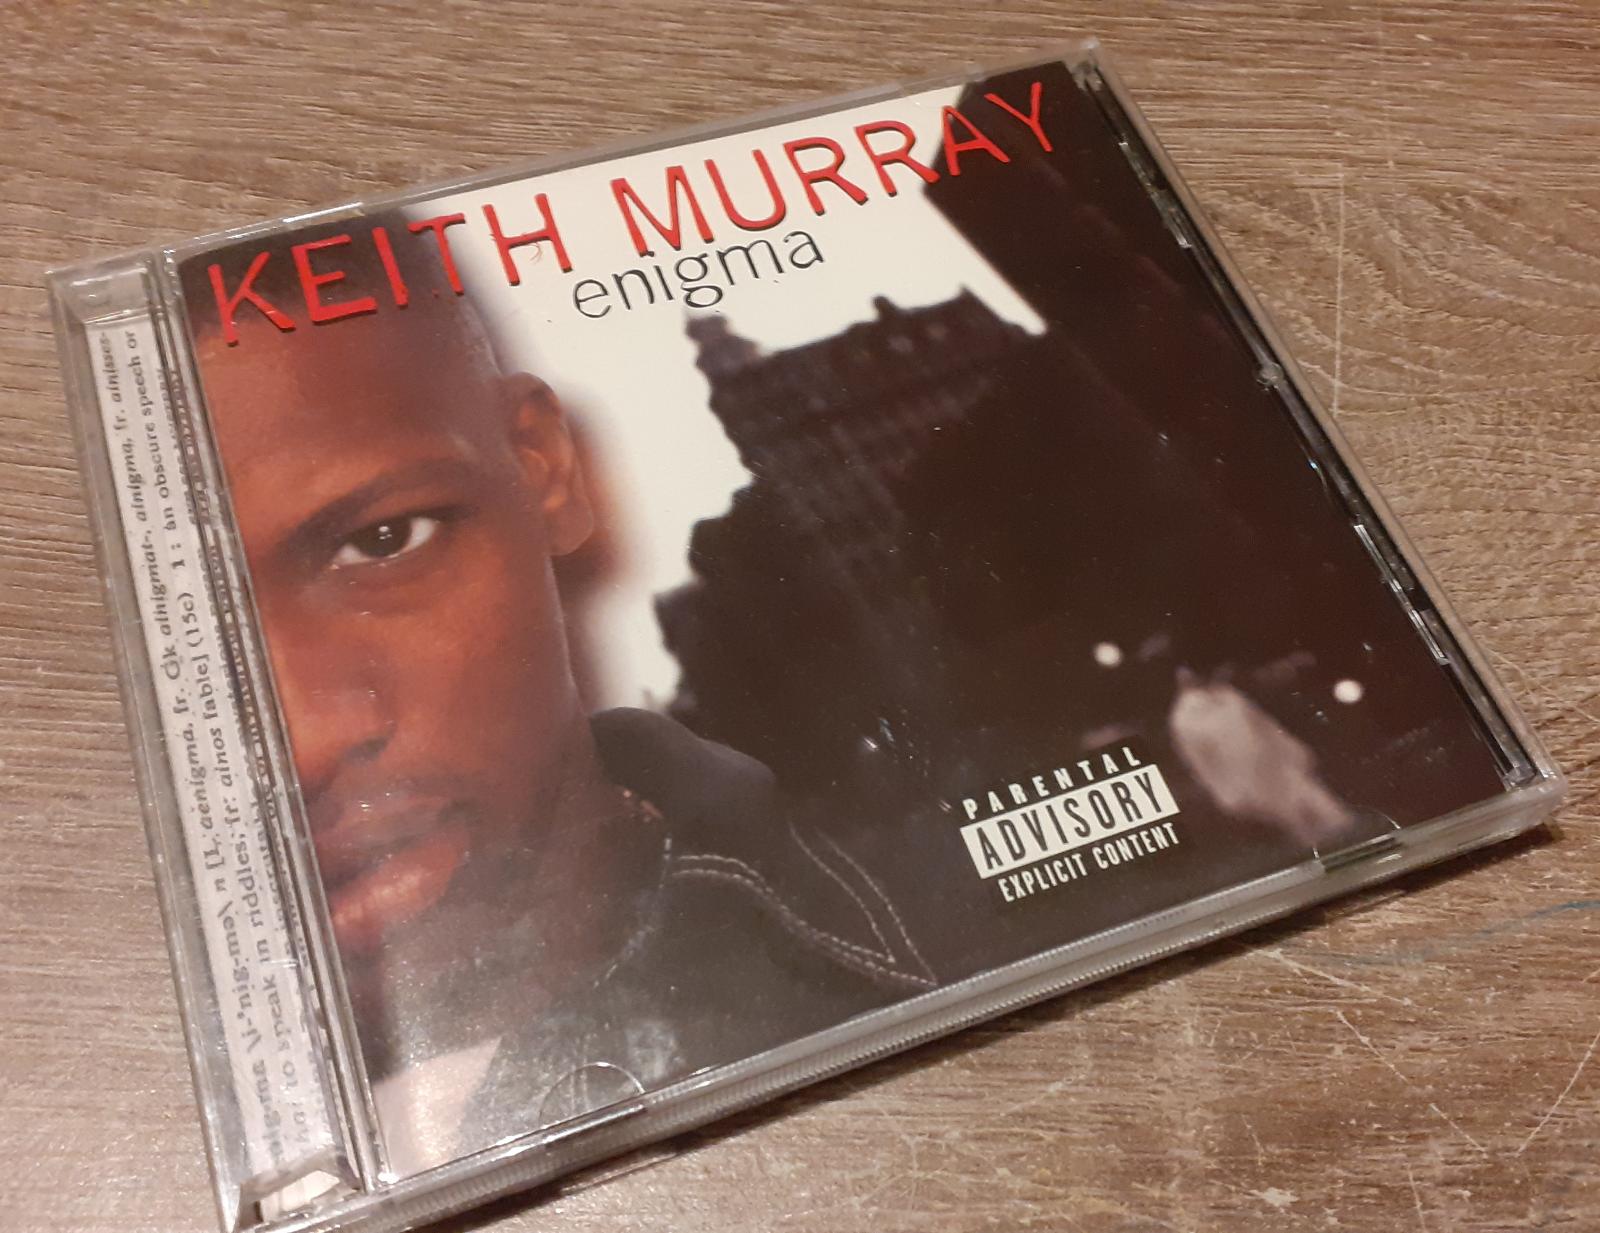 Keith murray enigma album